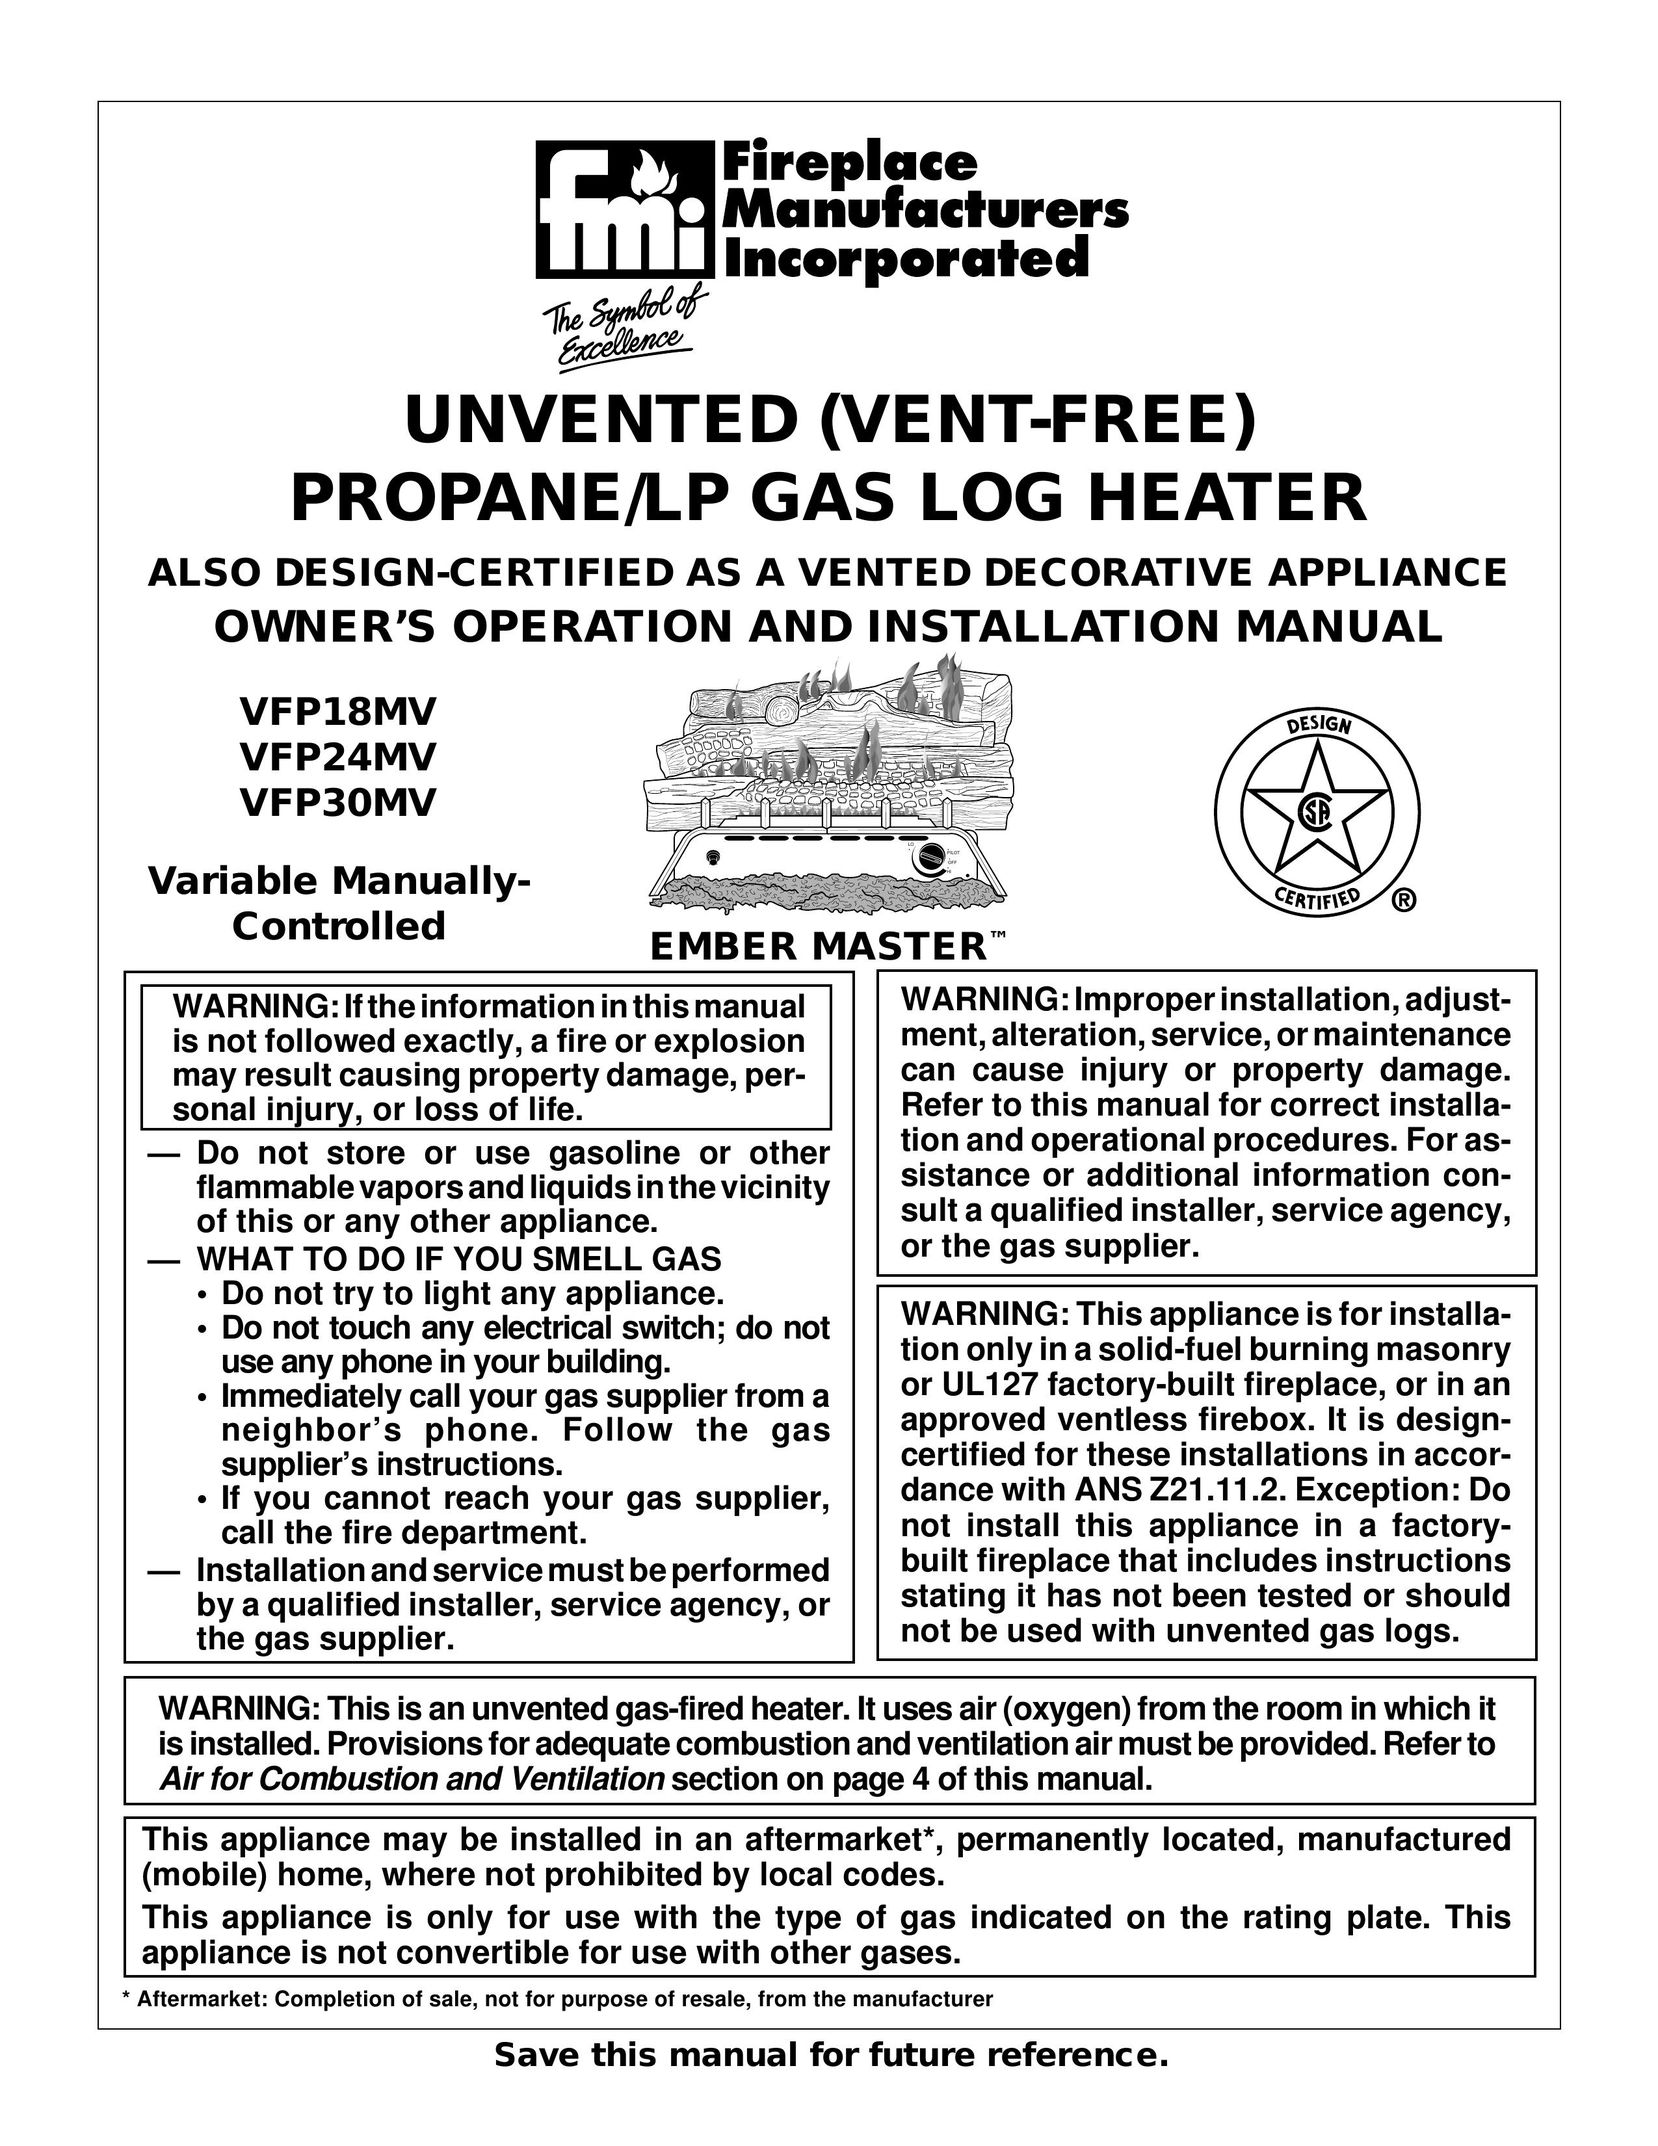 FMI VFP18MV Gas Heater User Manual